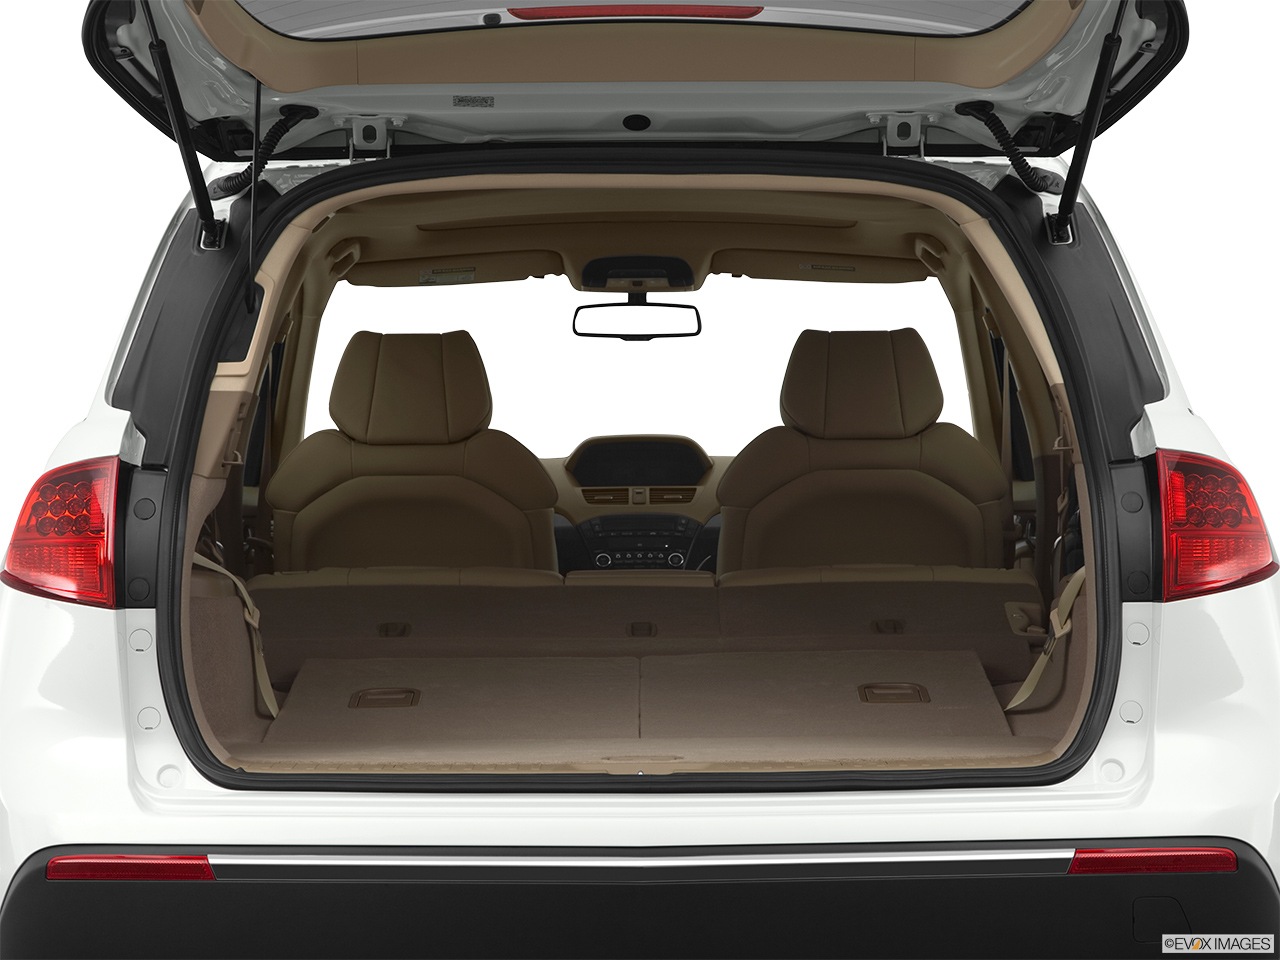 2012 Acura MDX MDX Hatchback & SUV rear angle. 